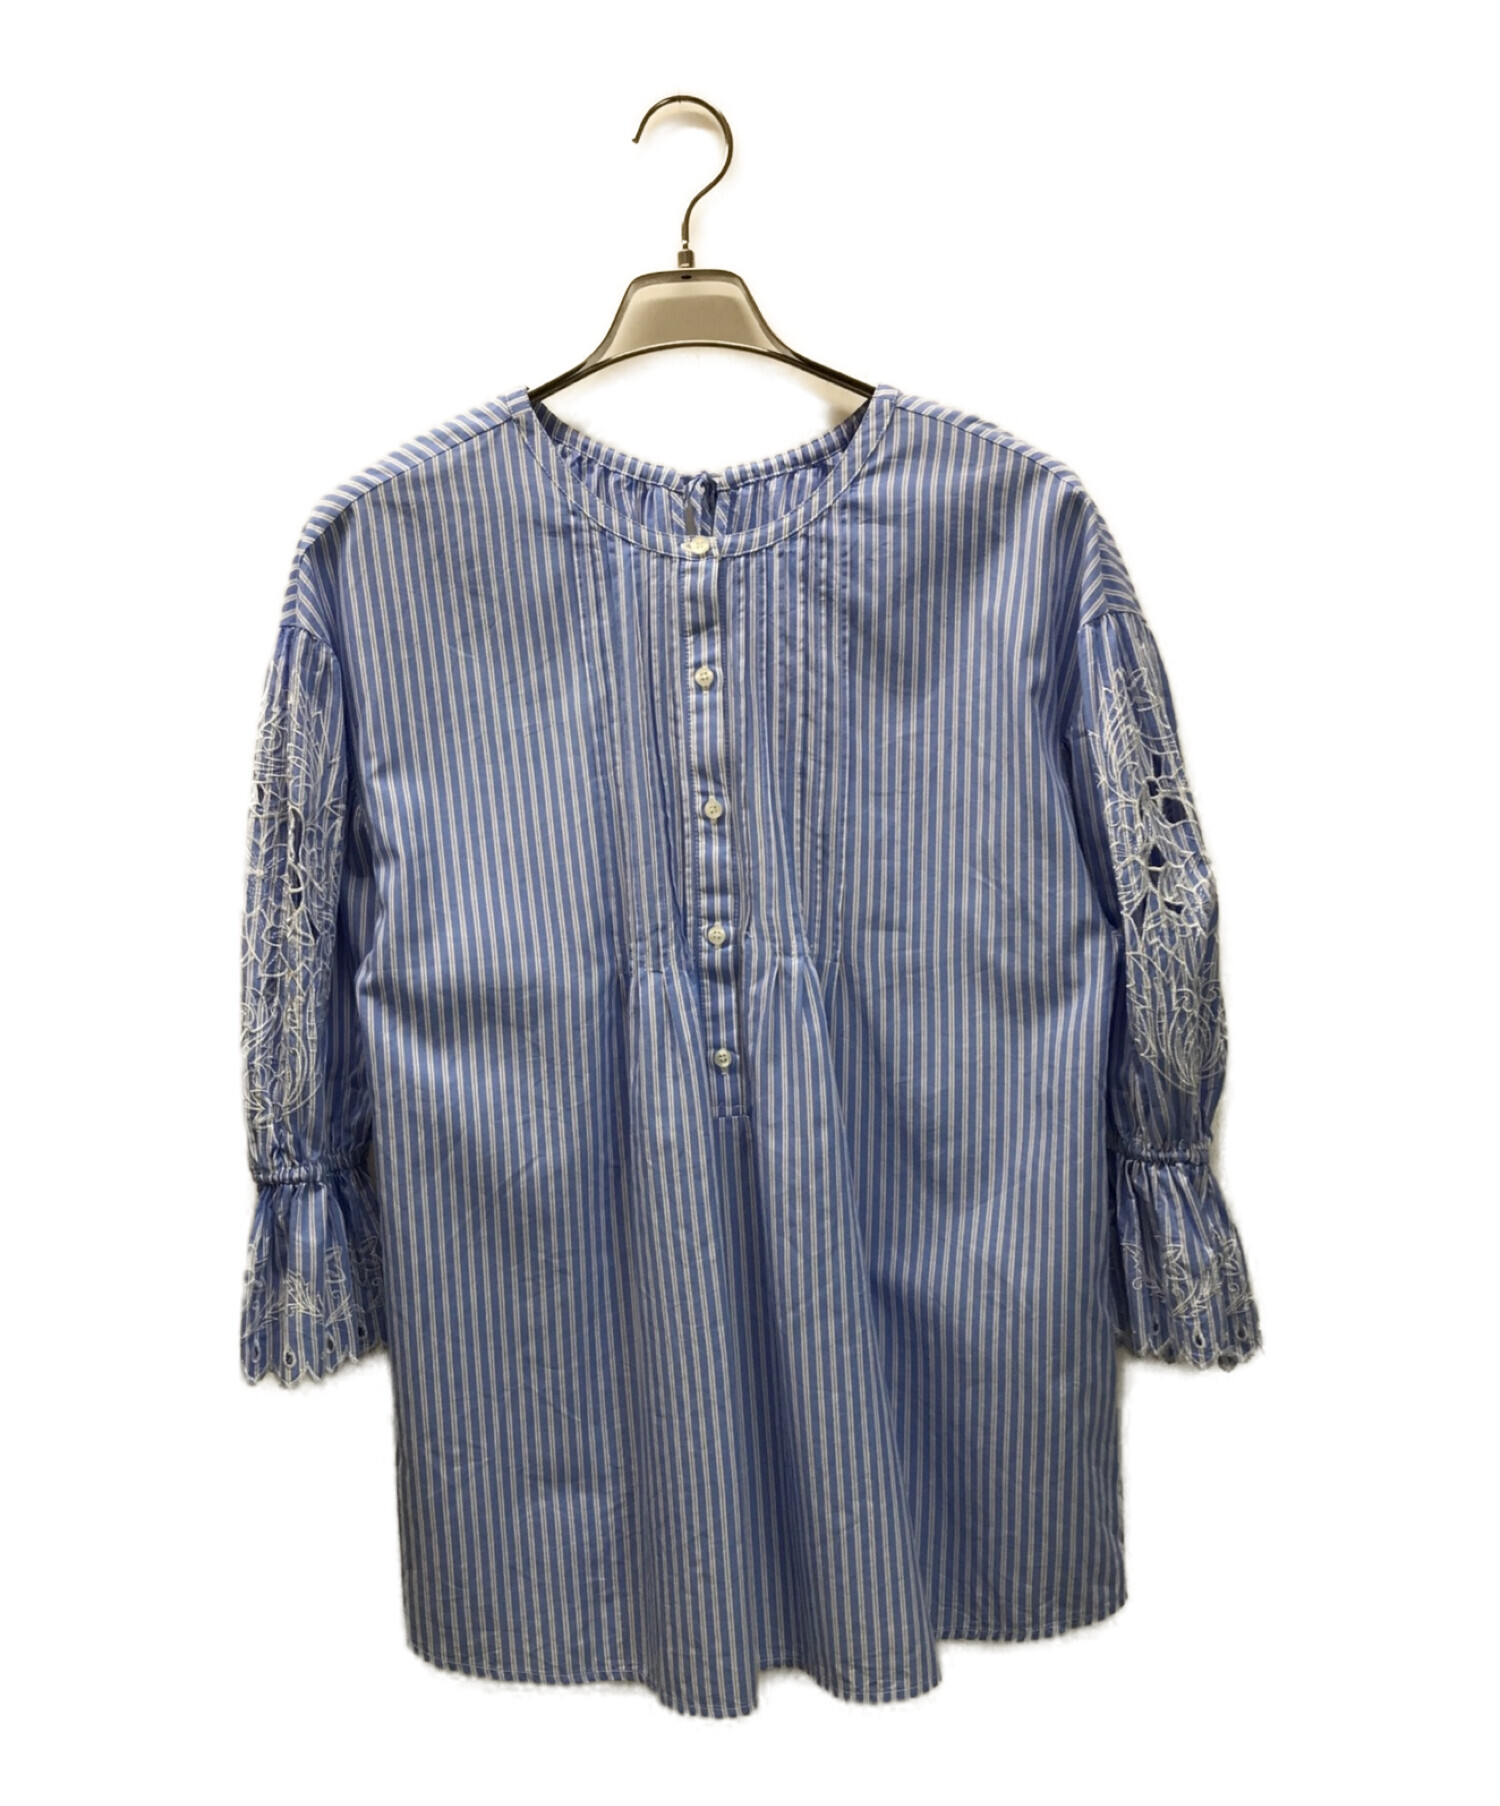 CADUNE (カデュネ) 袖刺繍ストライプブラウス ブルー サイズ:36